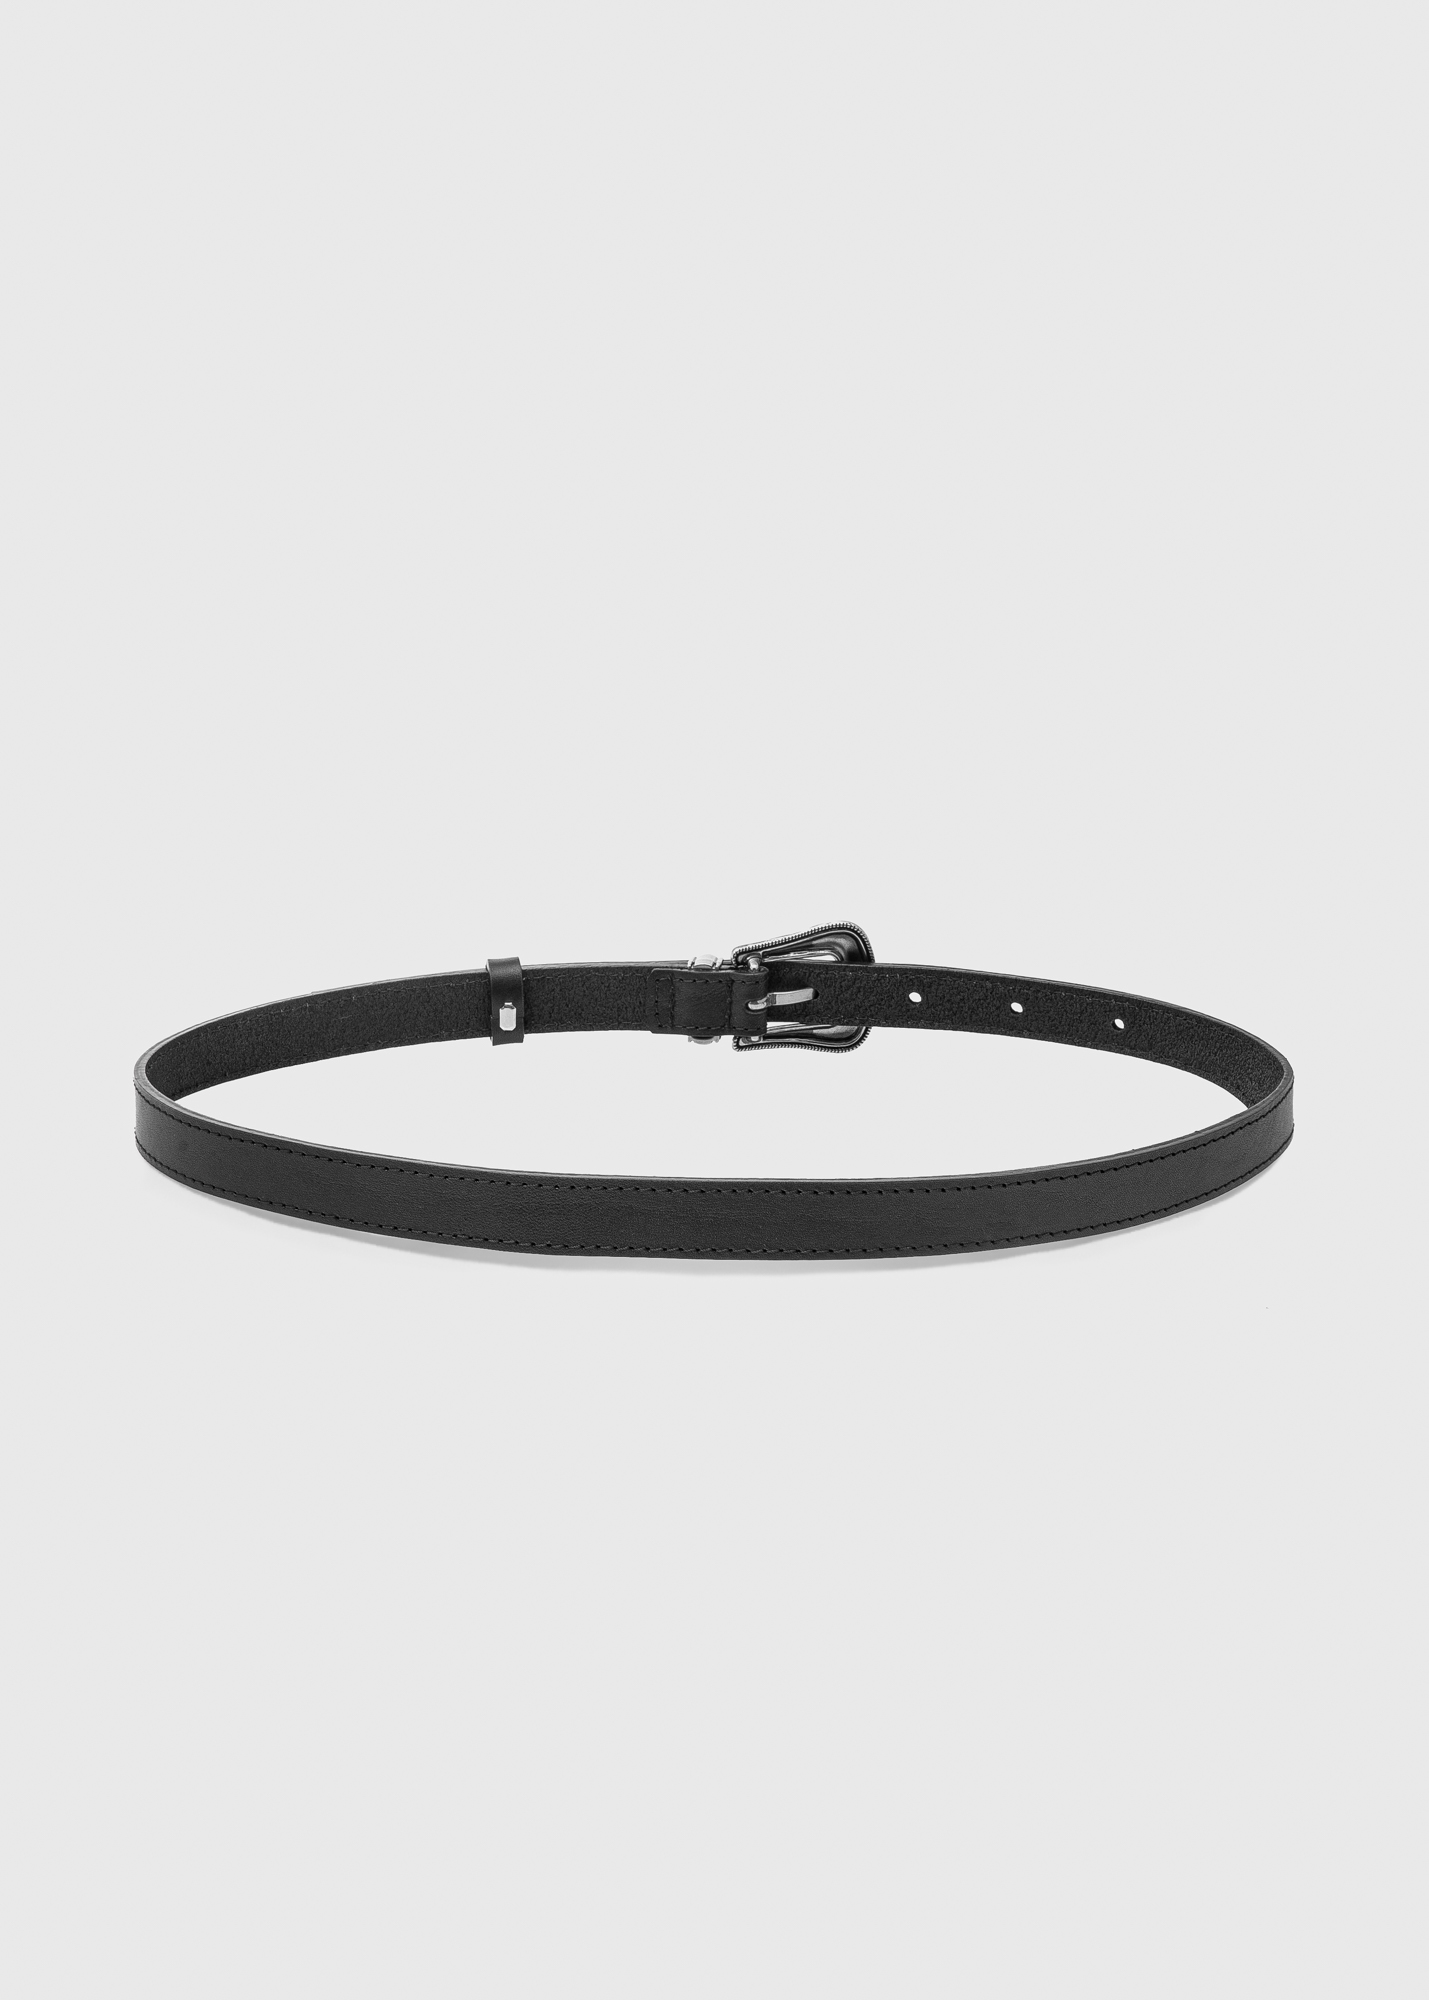 Simple belt black - Muskboots.com